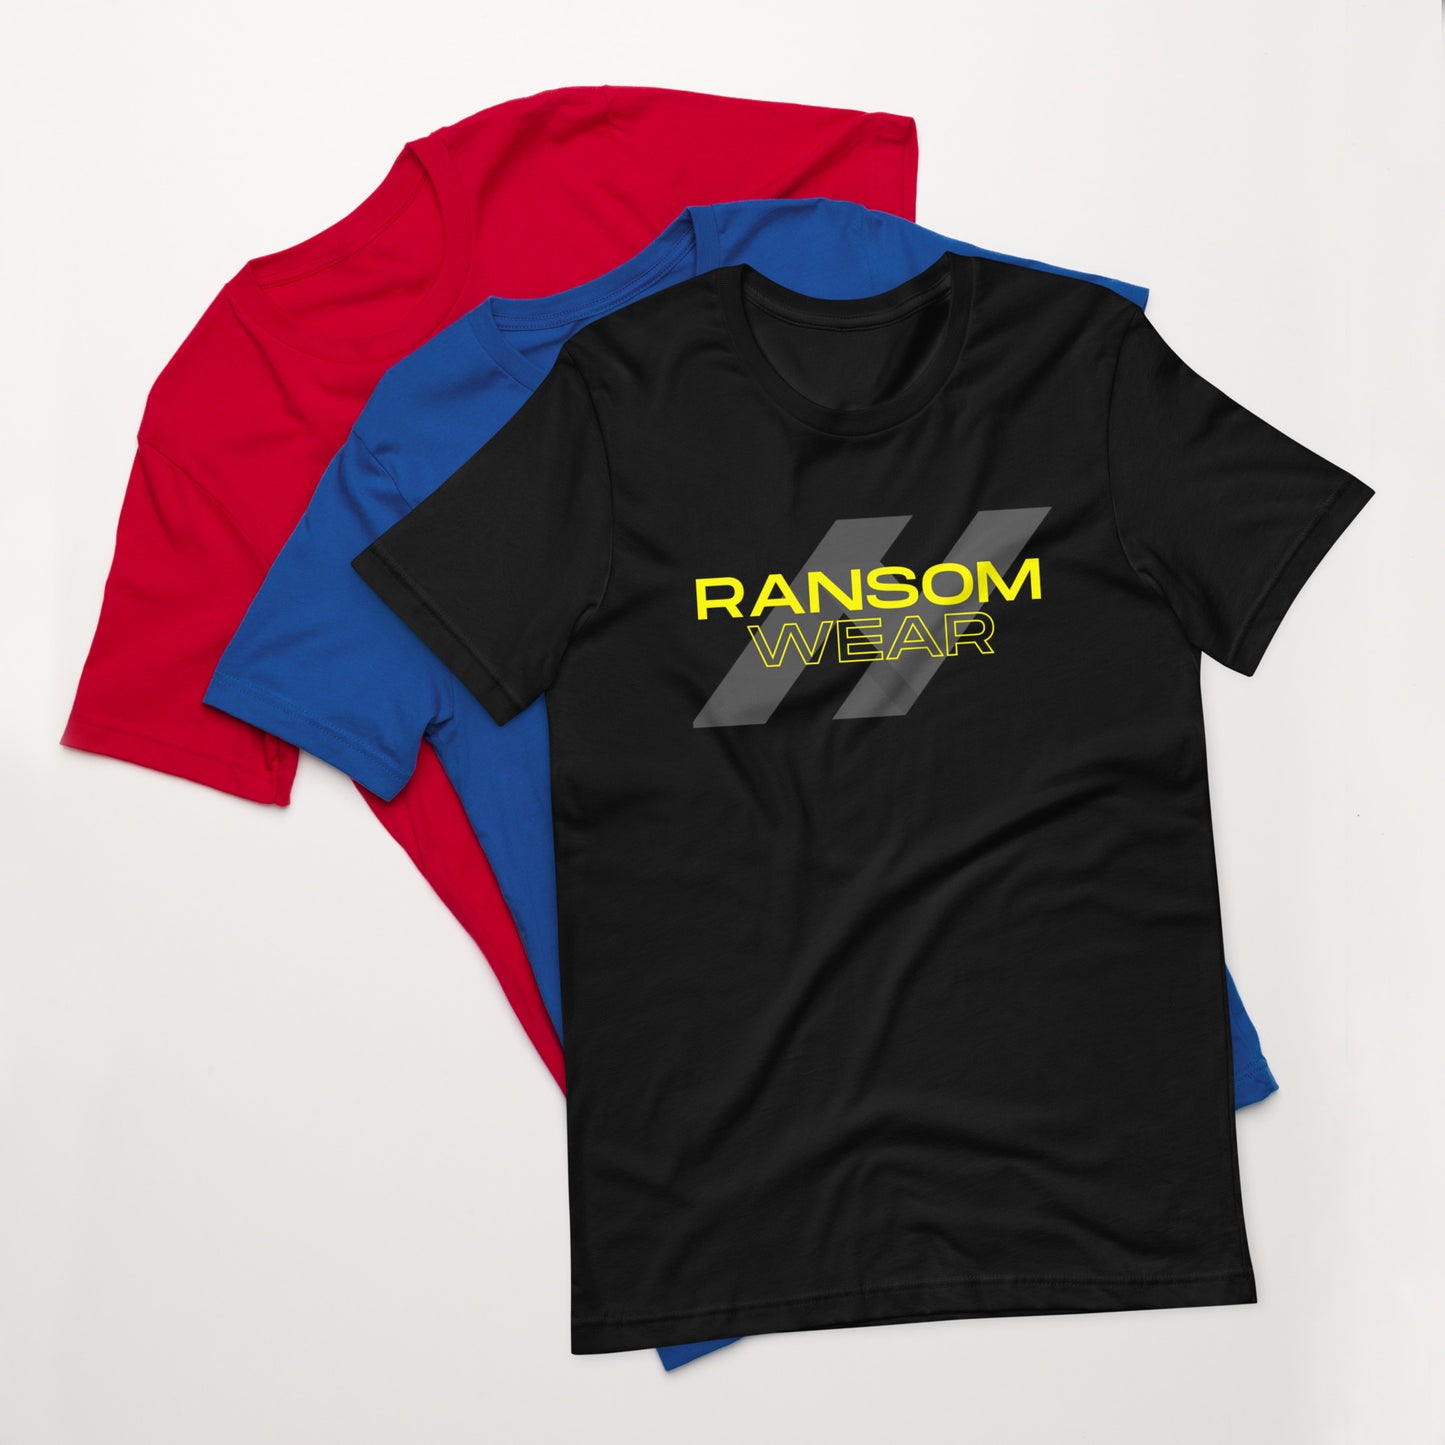 Ransom Wear Unisex T-Shirt